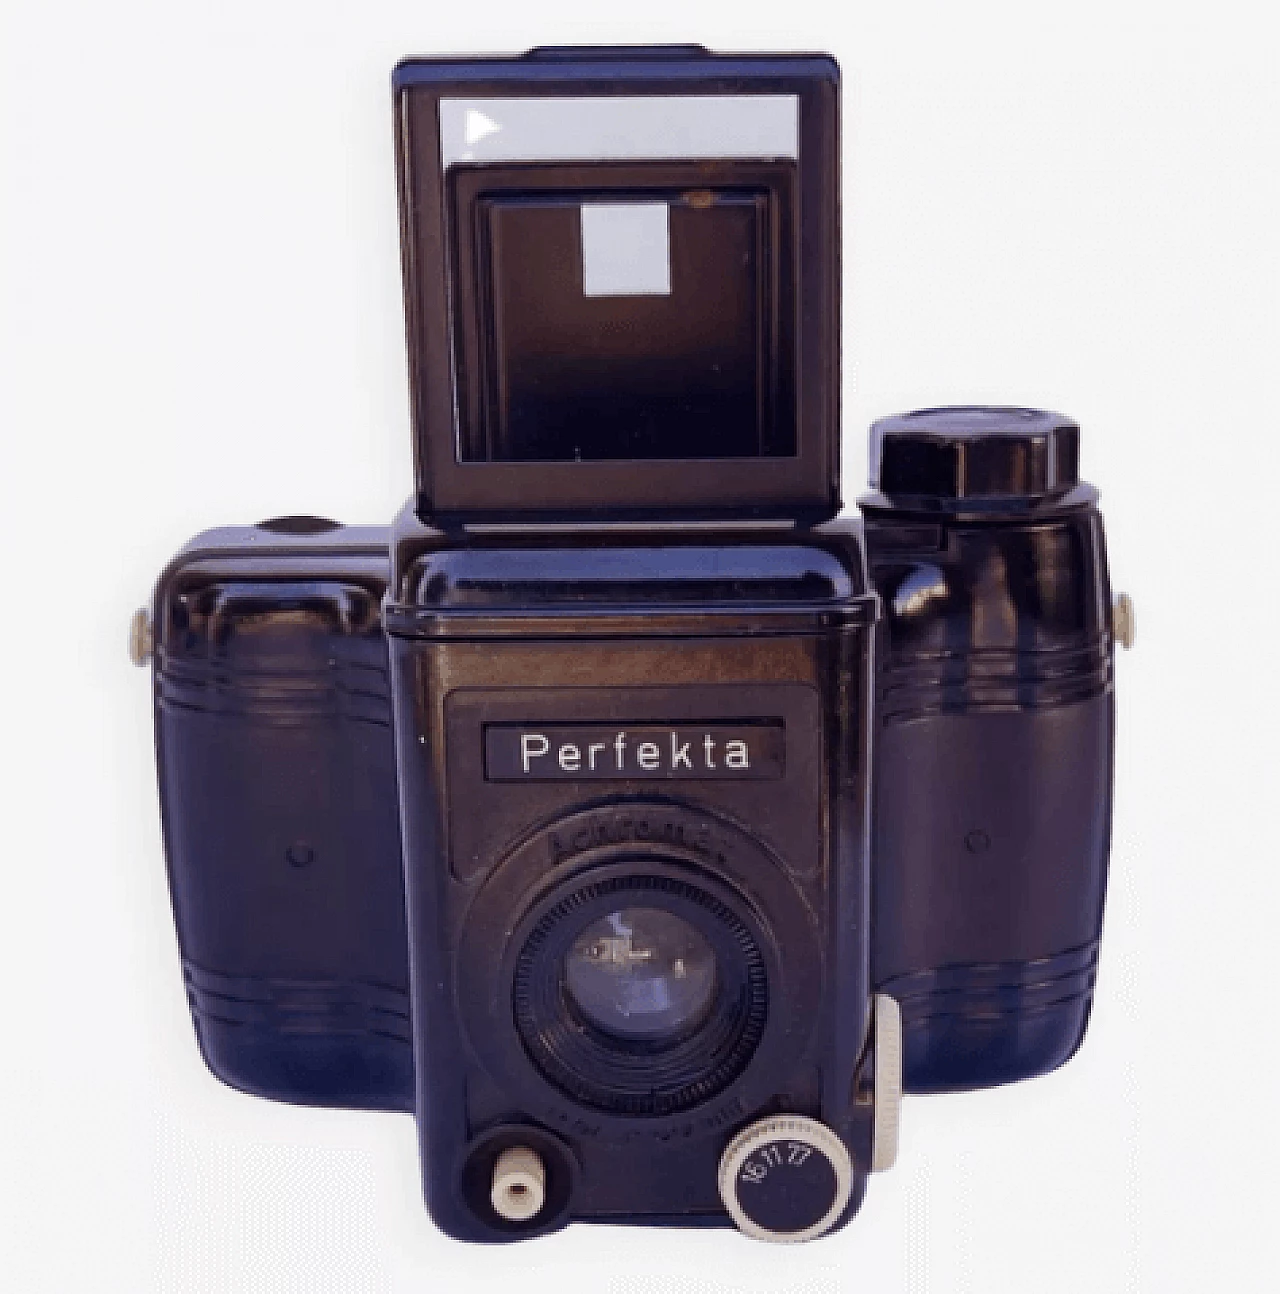 Perfekta Aeromat camera by VEB Rheinmatall, 1950s 1